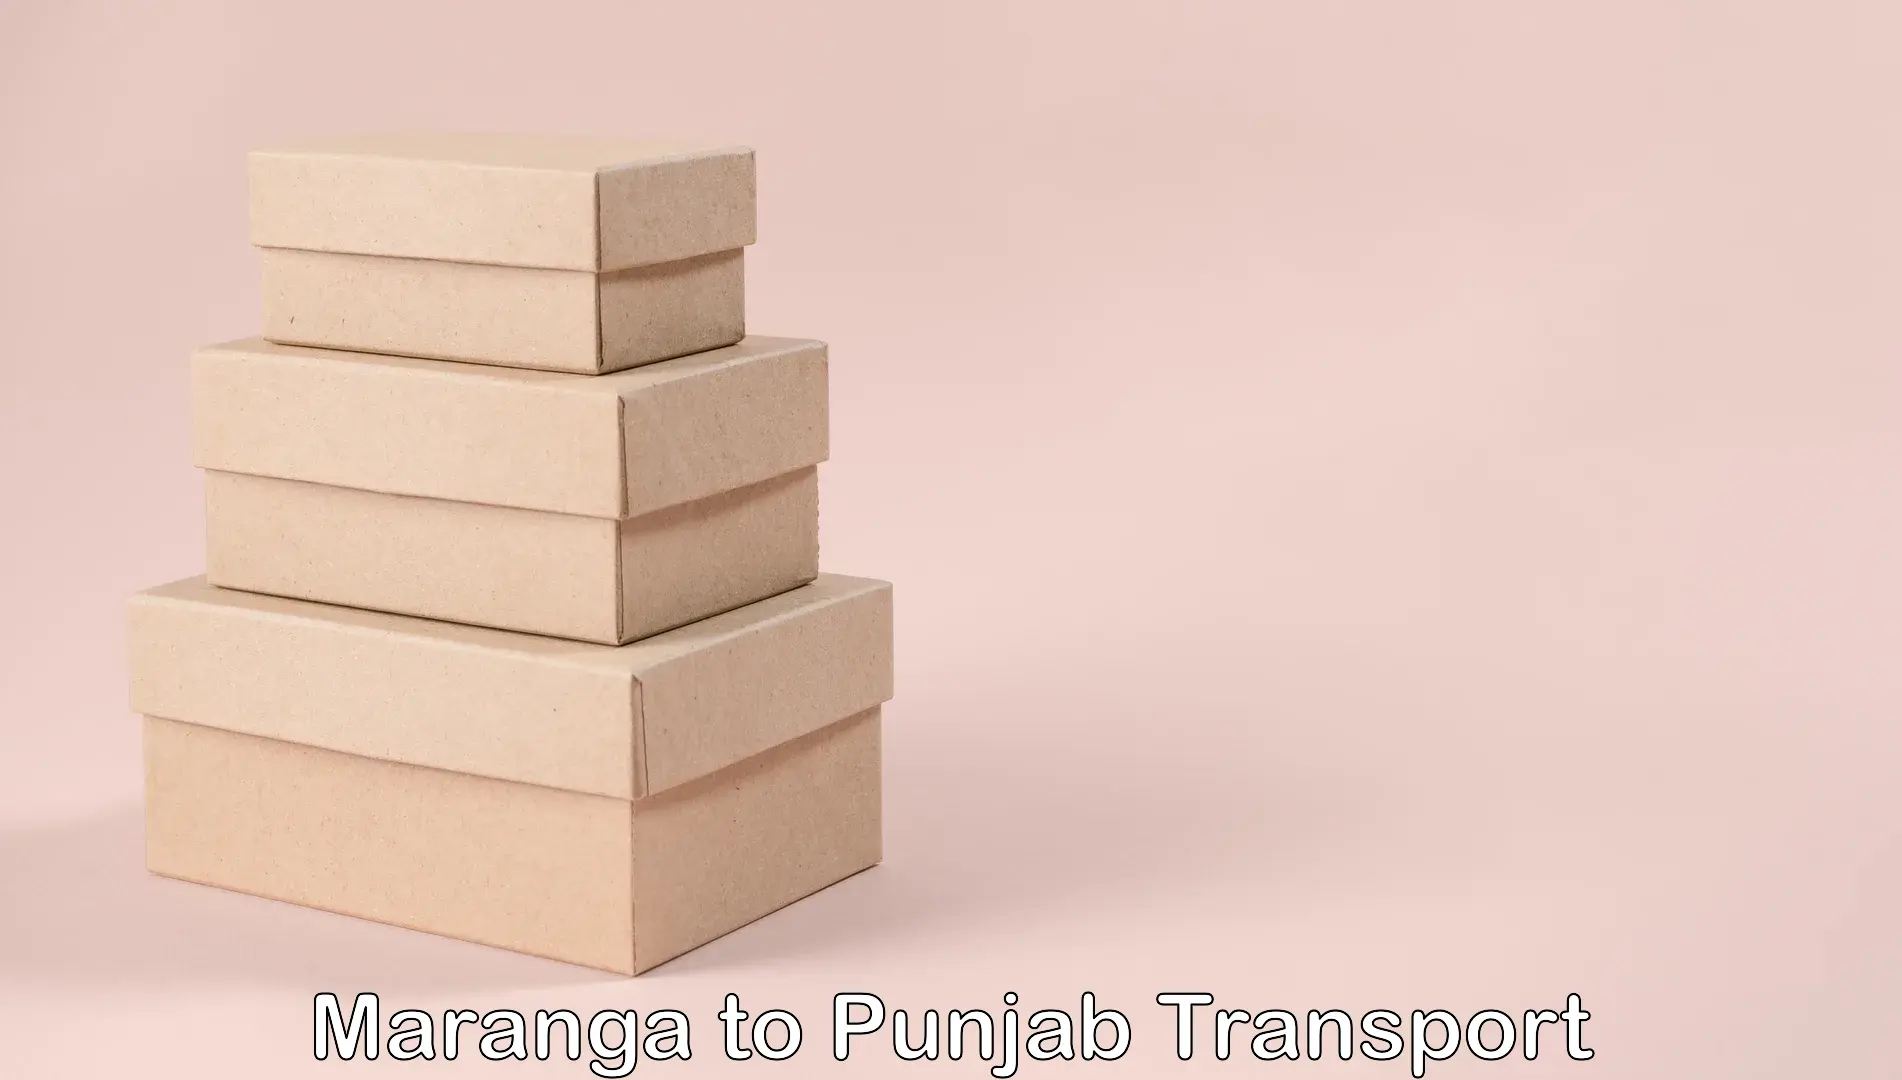 Commercial transport service Maranga to Punjab